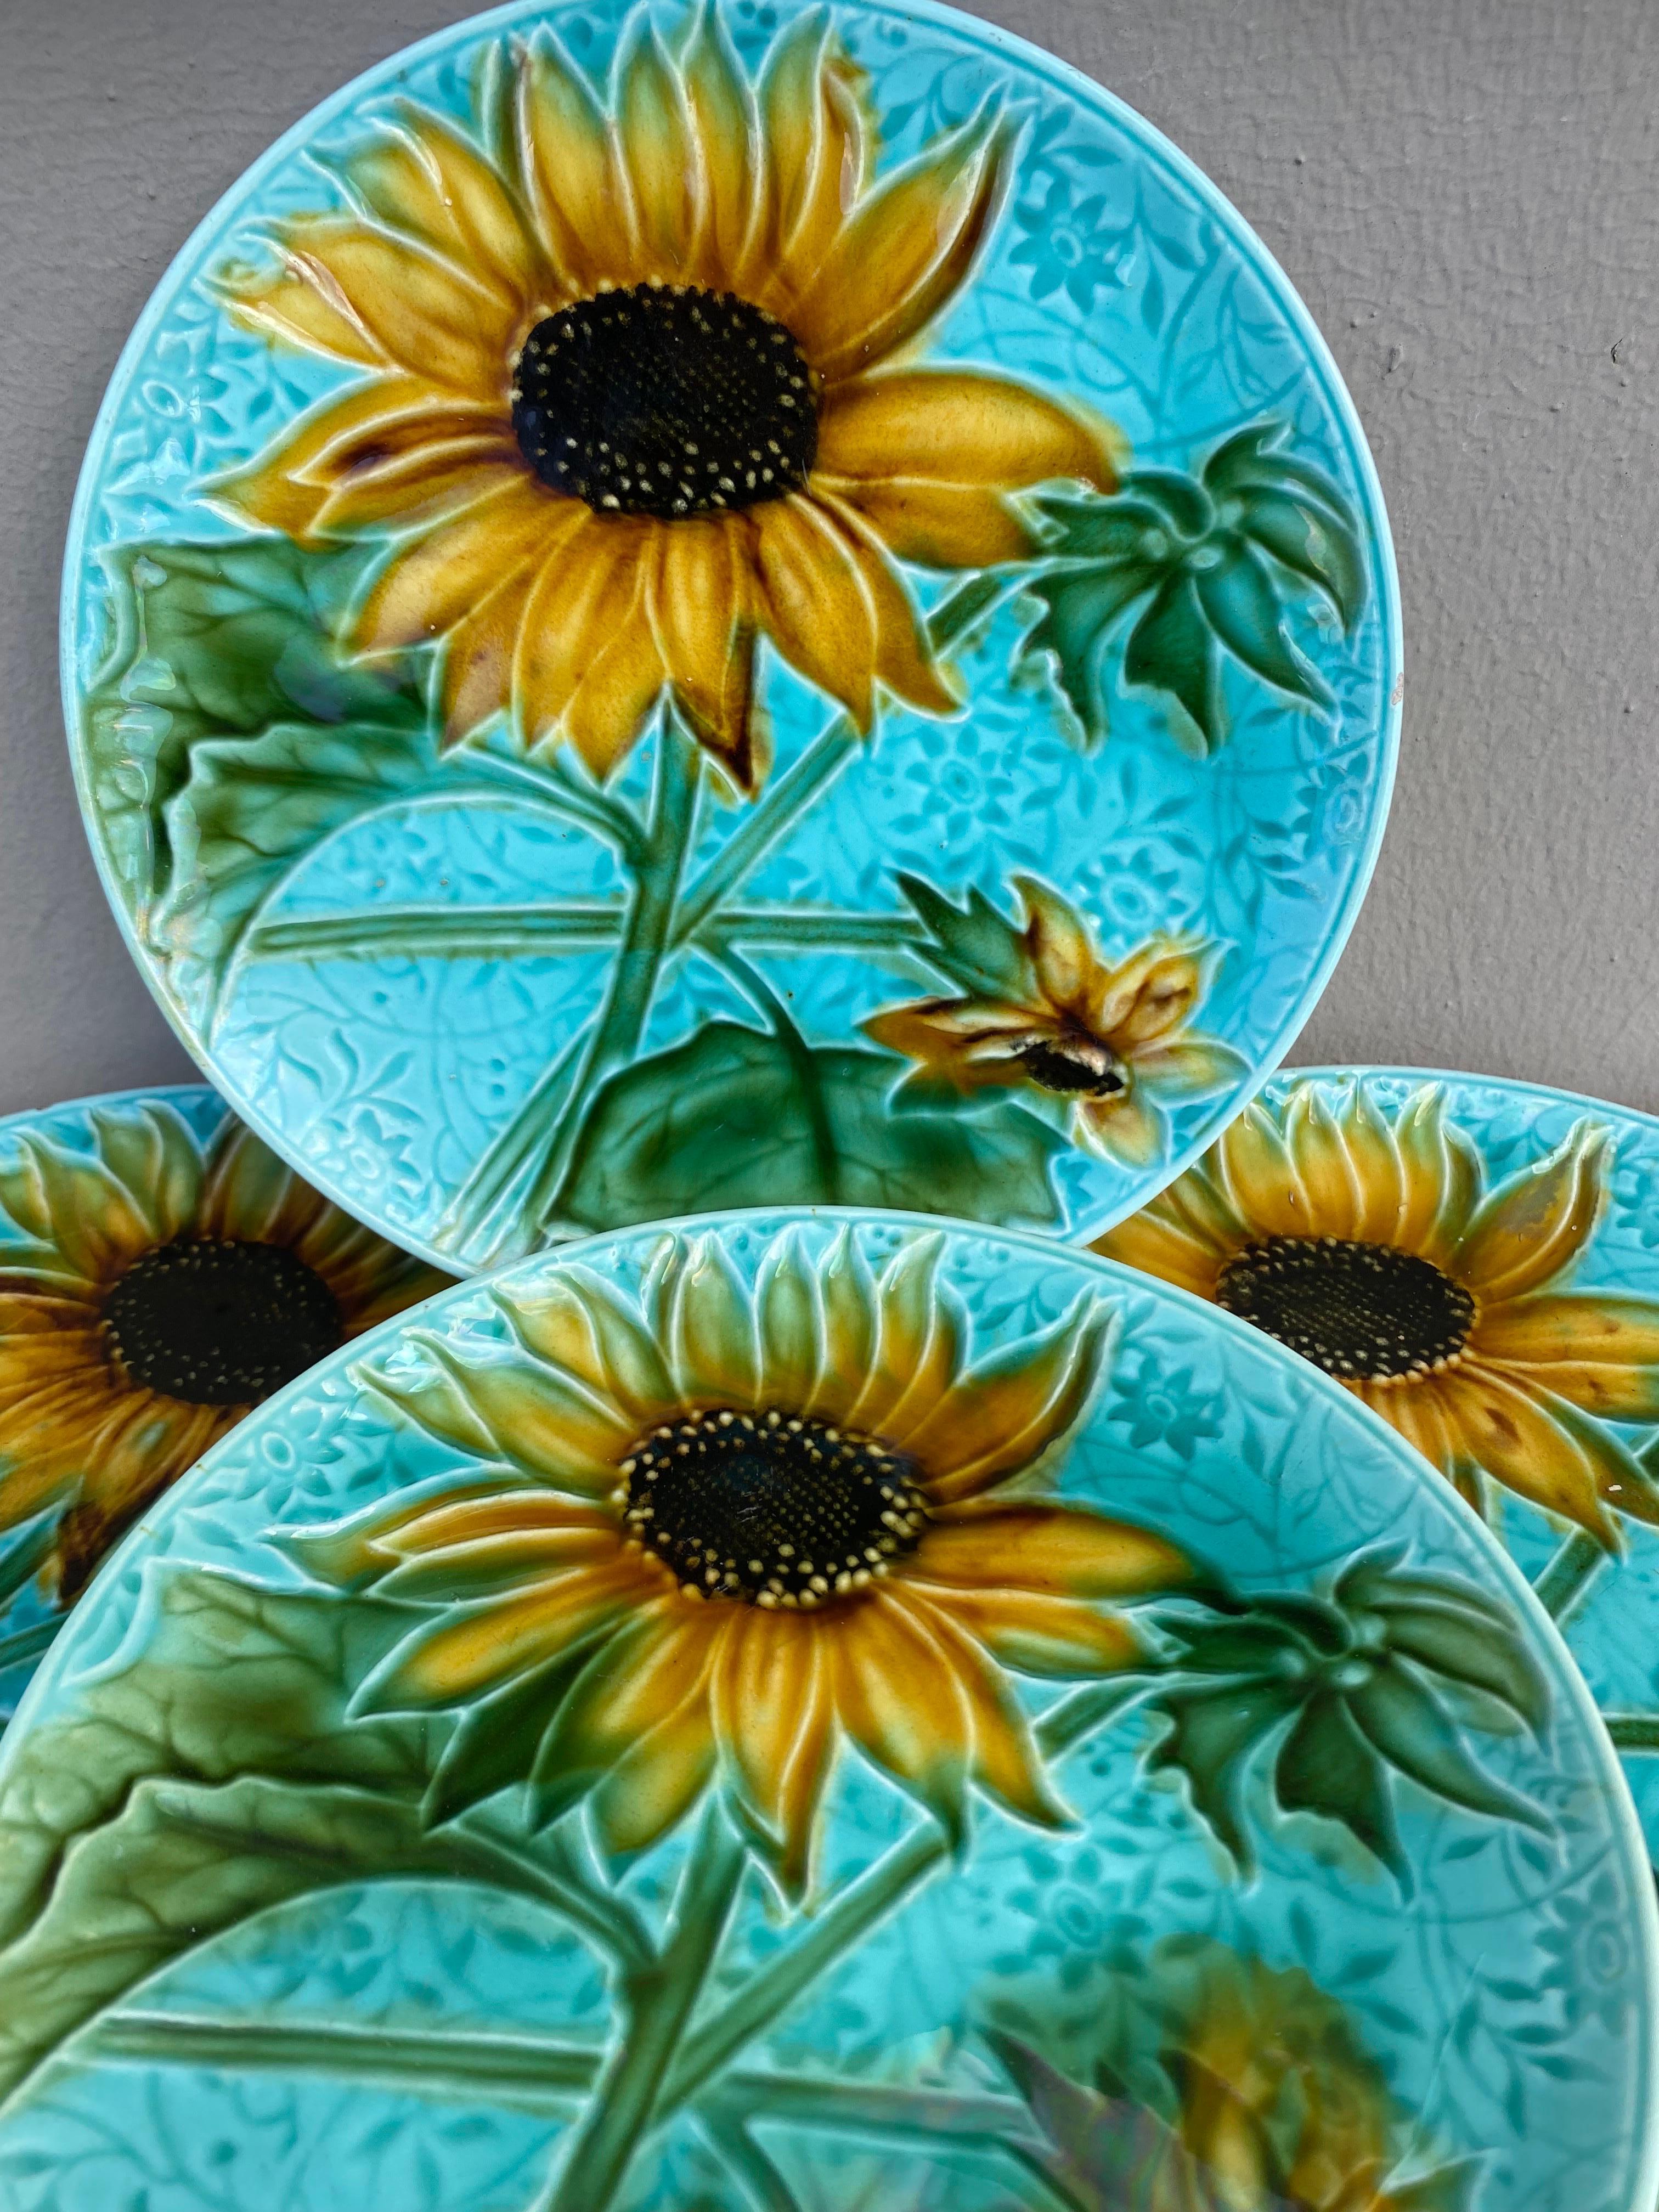 Early 20th Century Small German Majolica Sunflower Plate Circa 1900